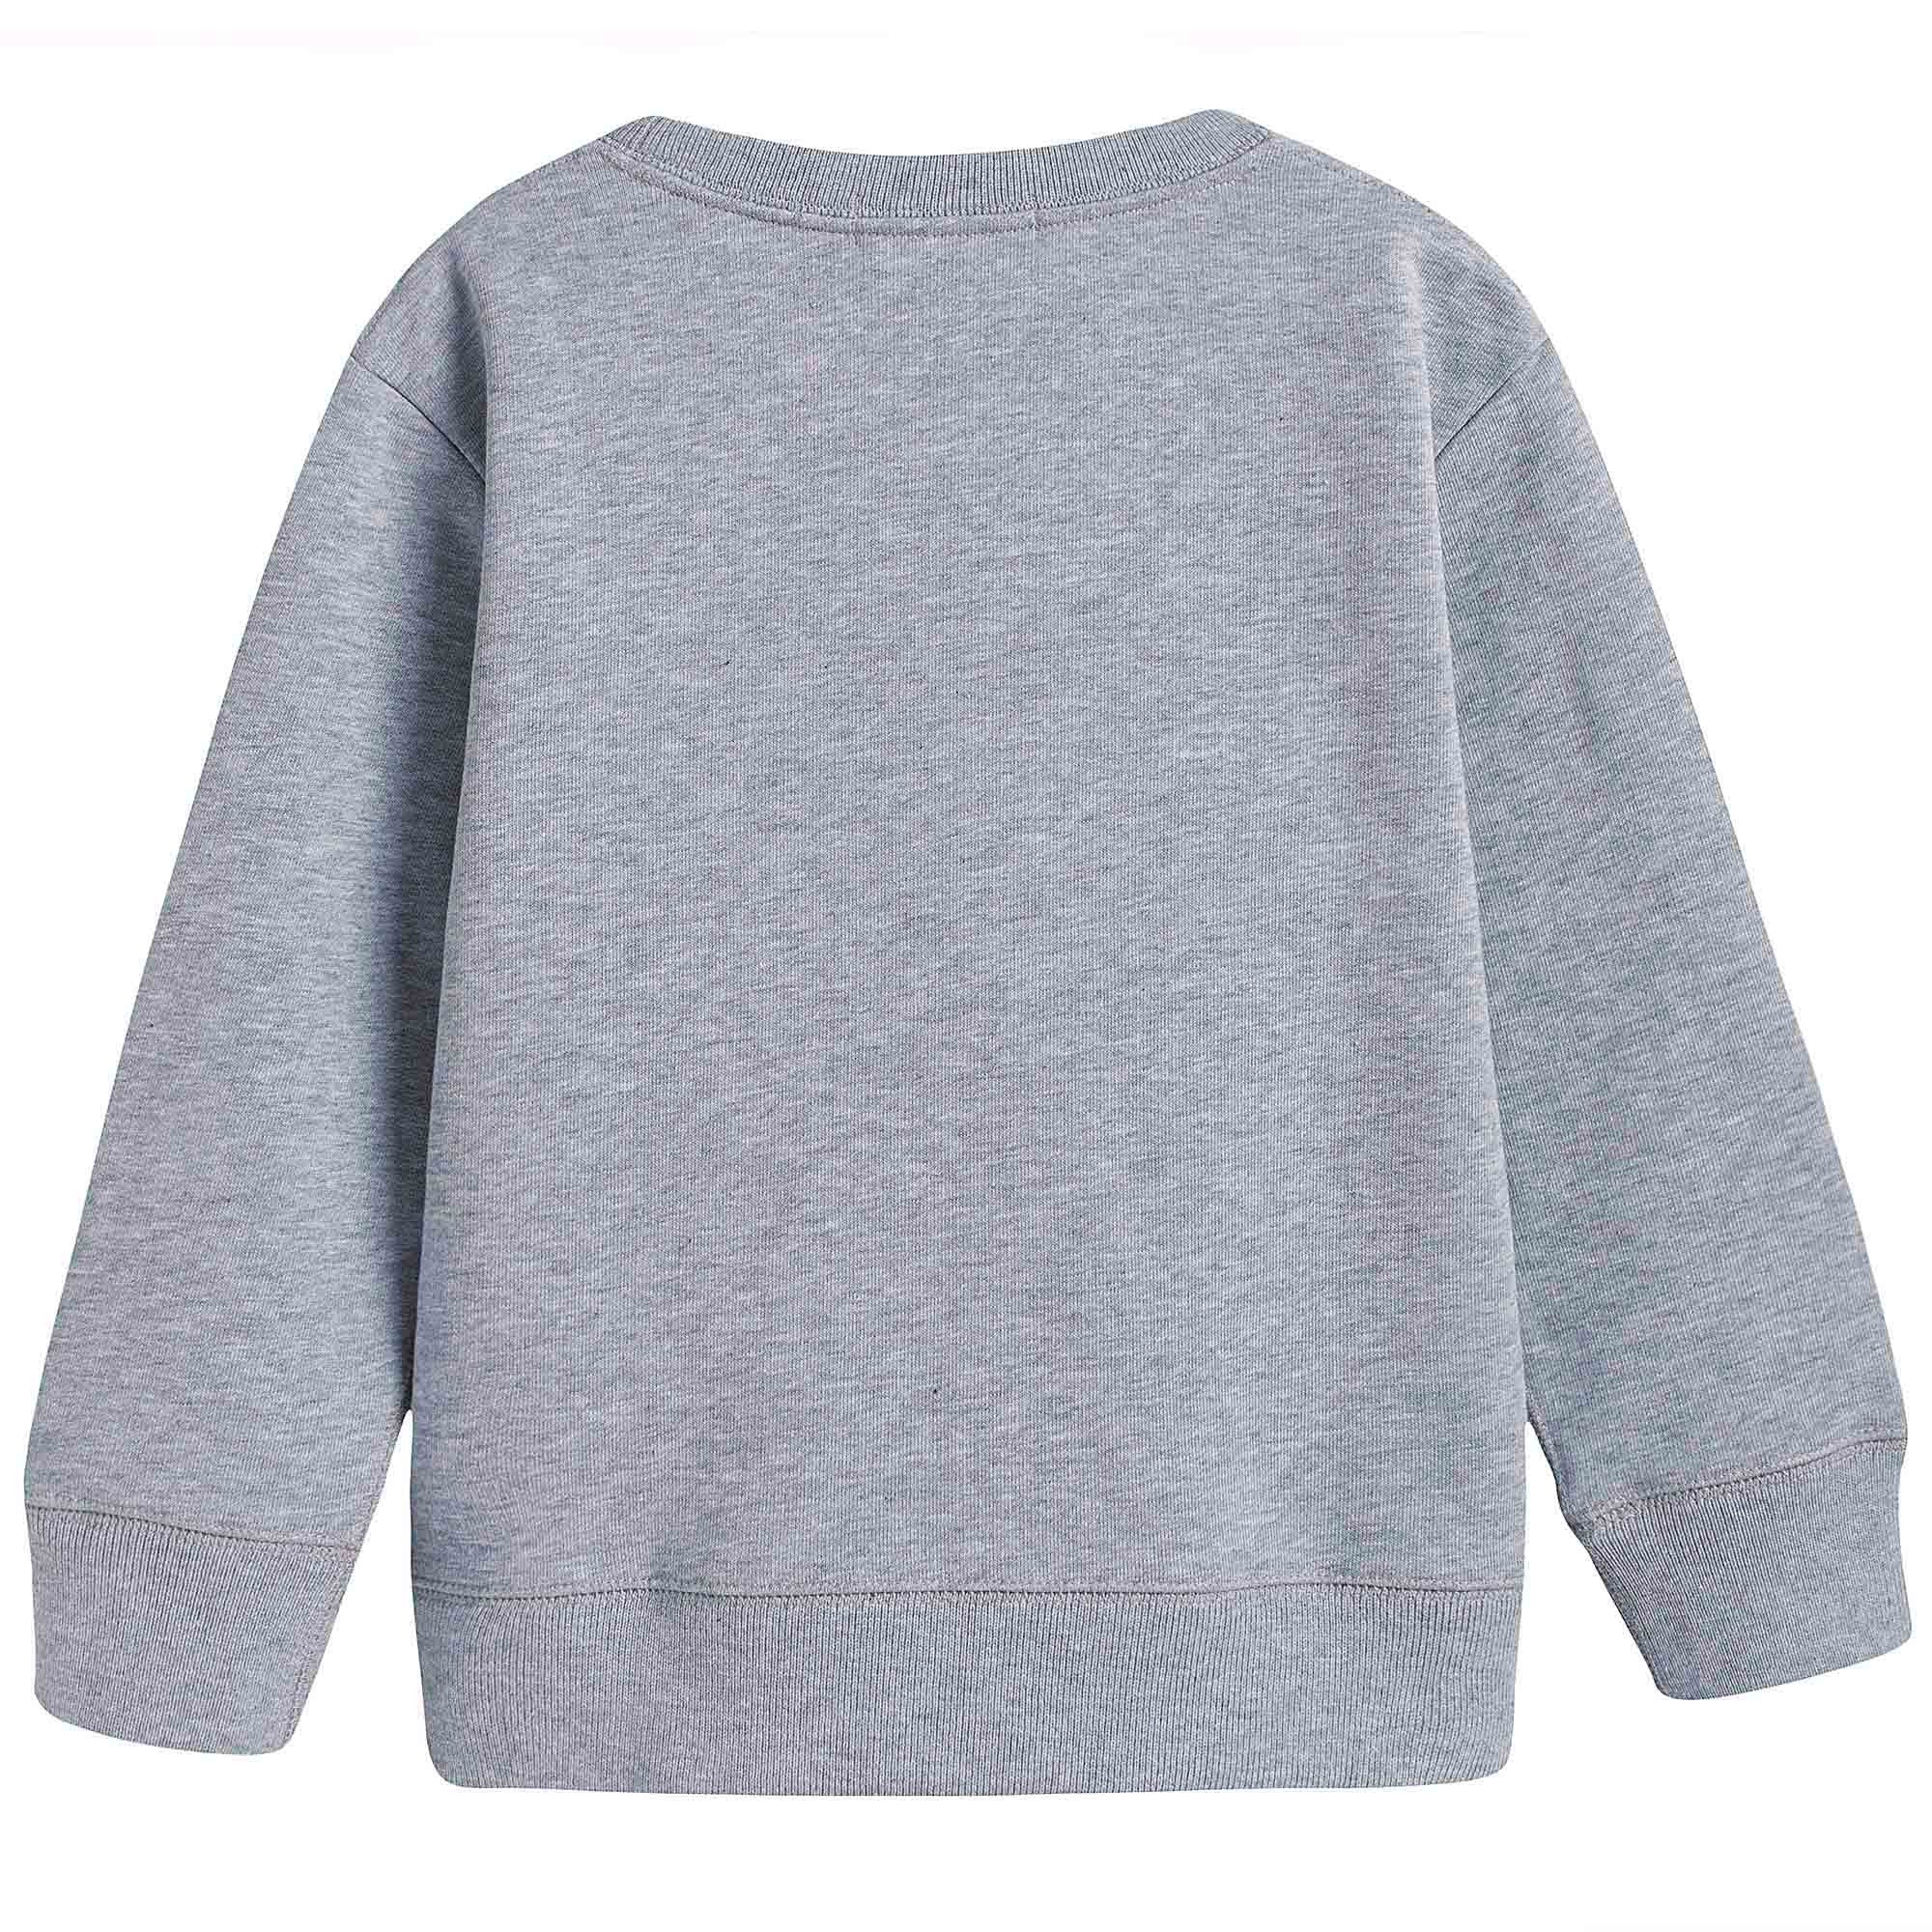 Boys Grey Equestrian Knight Trims Sweatshirt - CÉMAROSE | Children's Fashion Store - 2